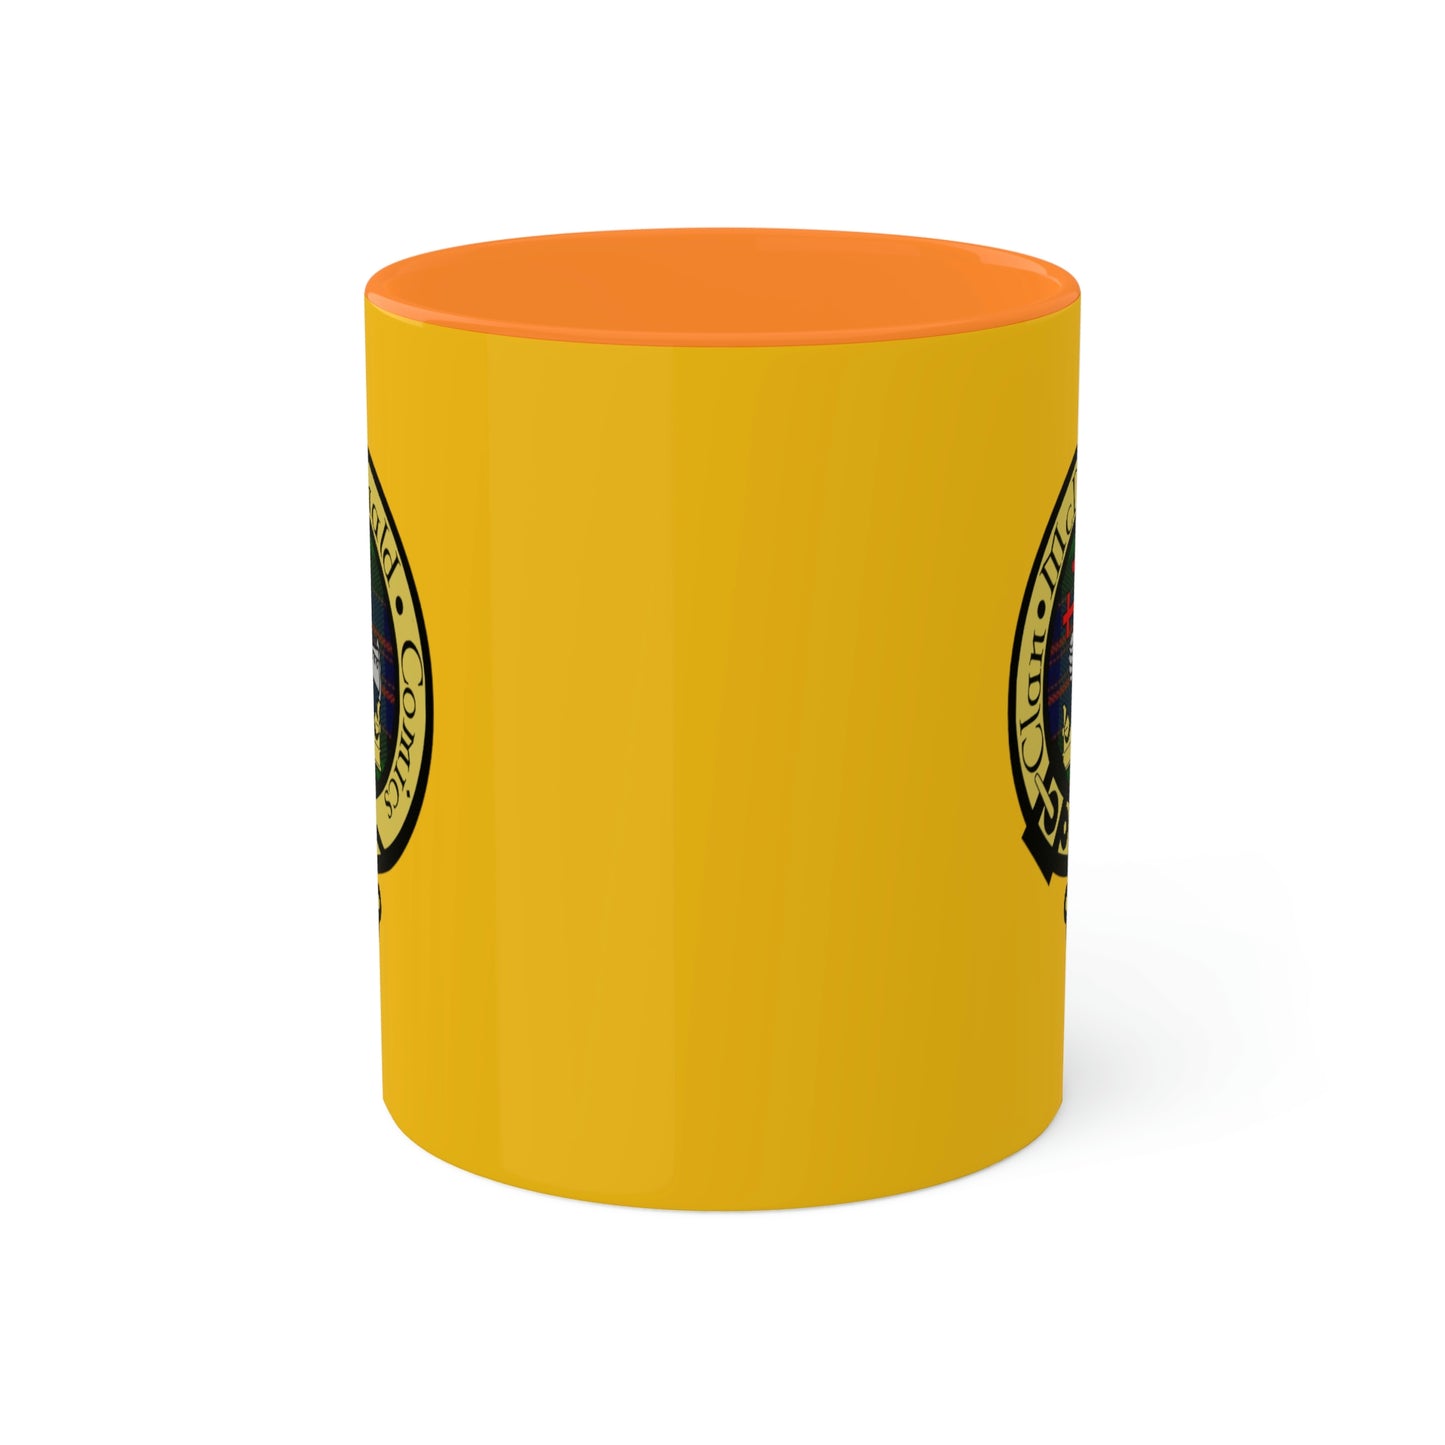 Clan McDonald Comics Coffee Mug - Yellow